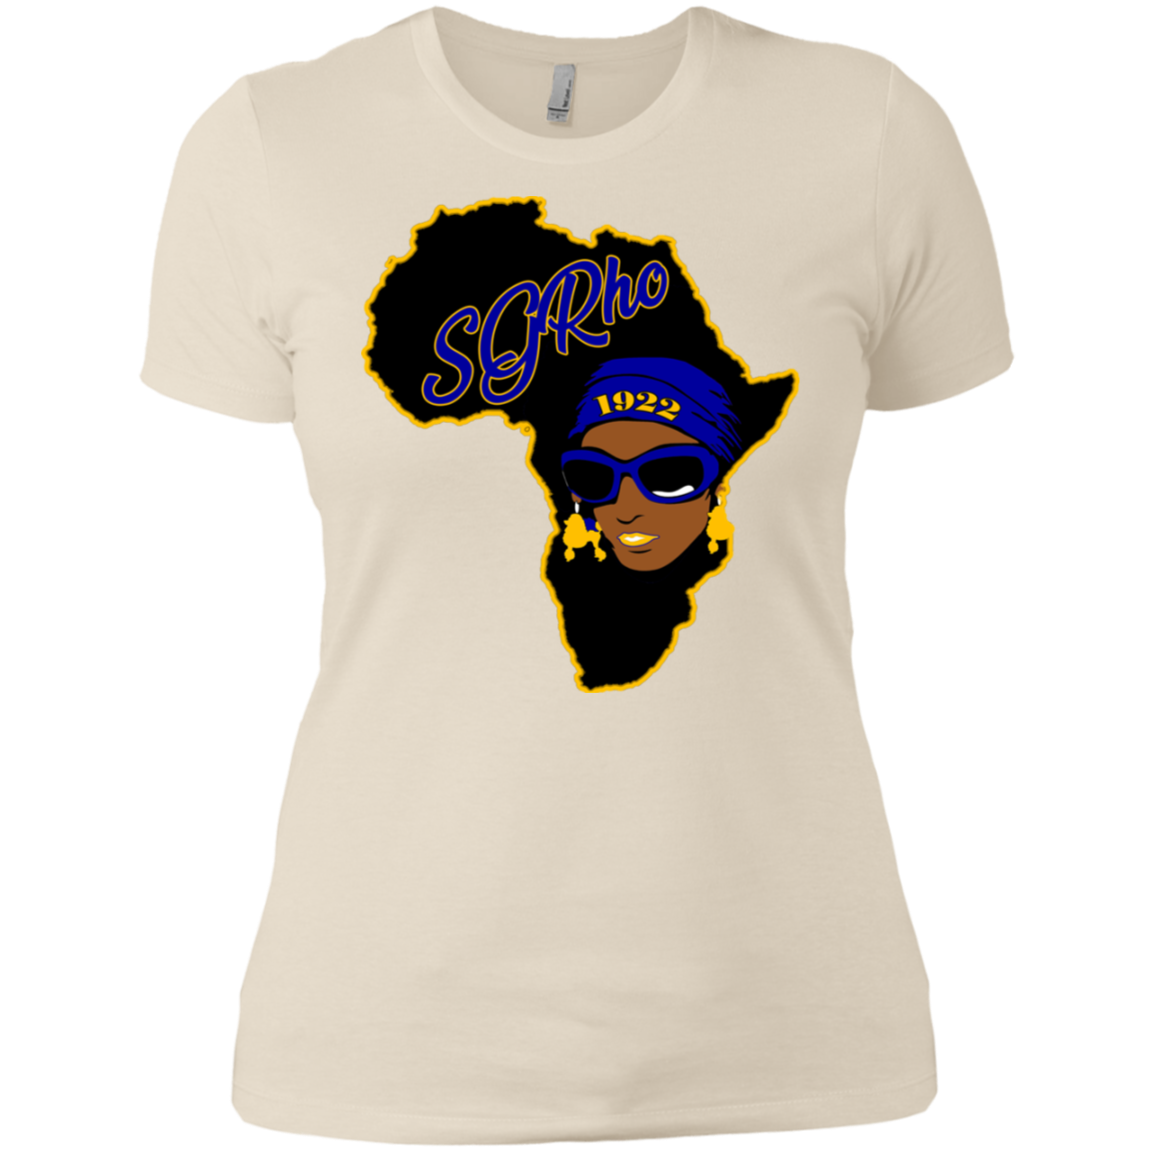 African Sgrho Ladies' Boyfriend T-Shirt